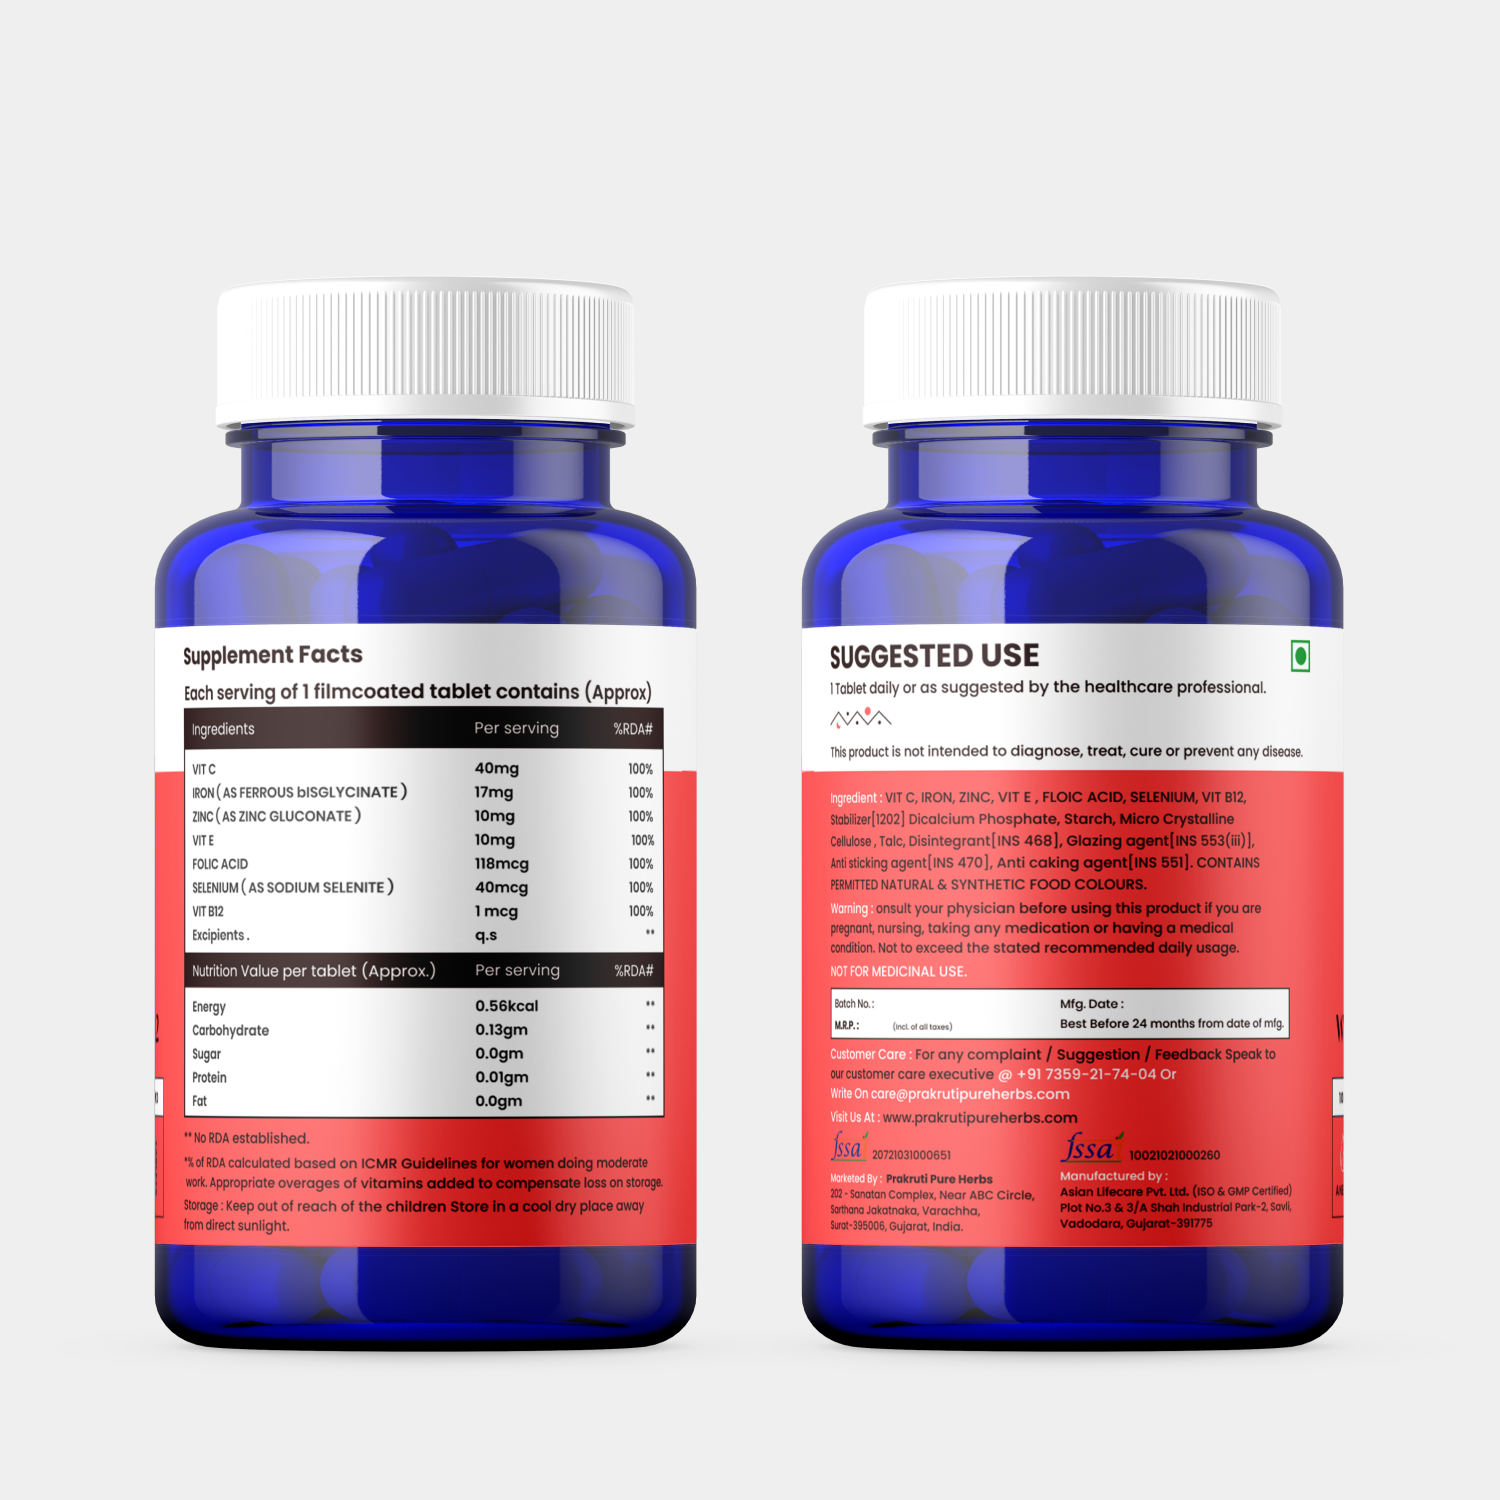 Iron Folic Acid & Vitamin C | 120 Tablets